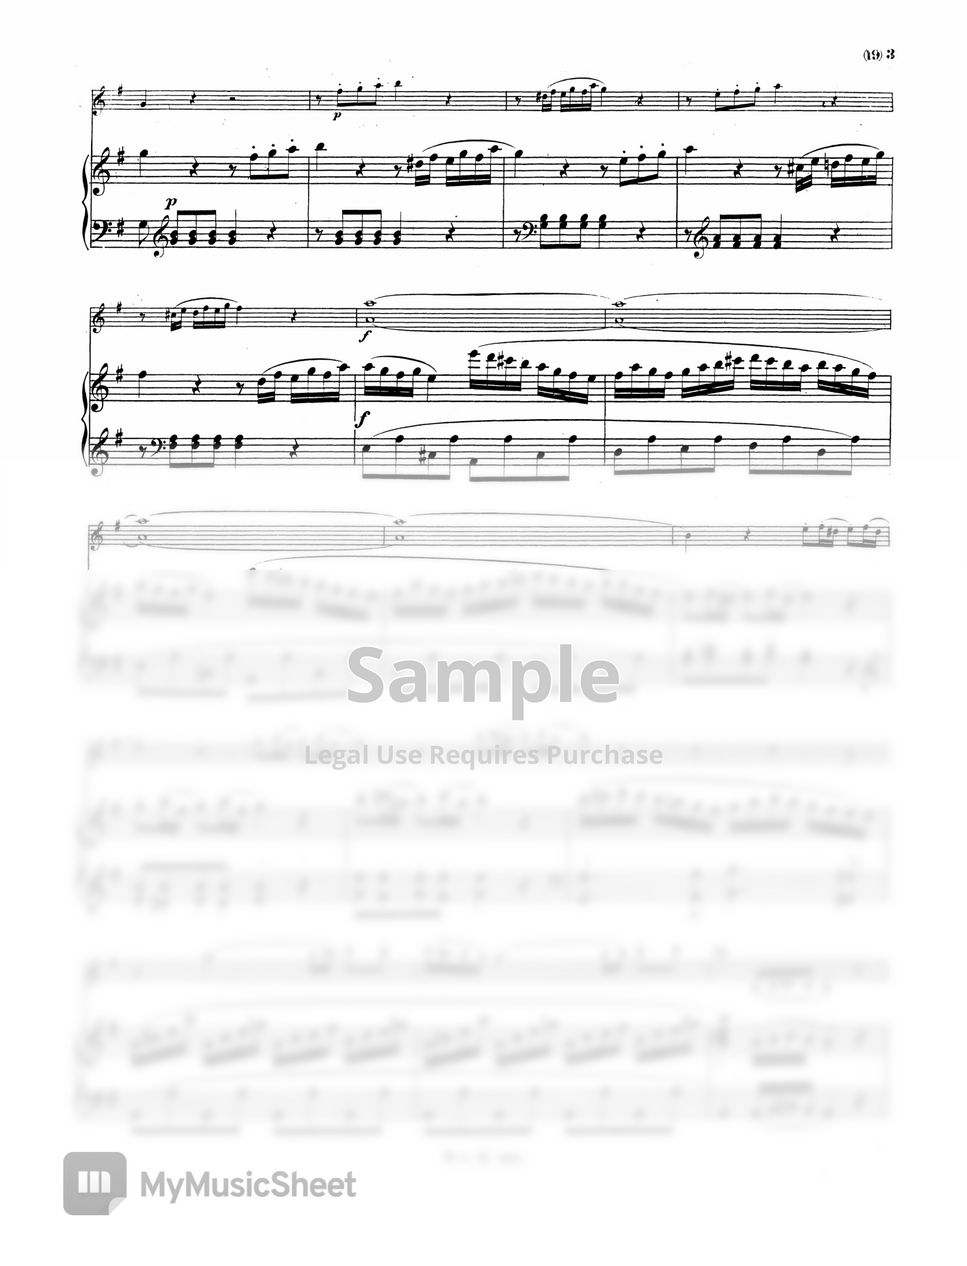 W.A.Mozart - Violin Sonata No. 25, G Major, K. 301 by Original Sheet